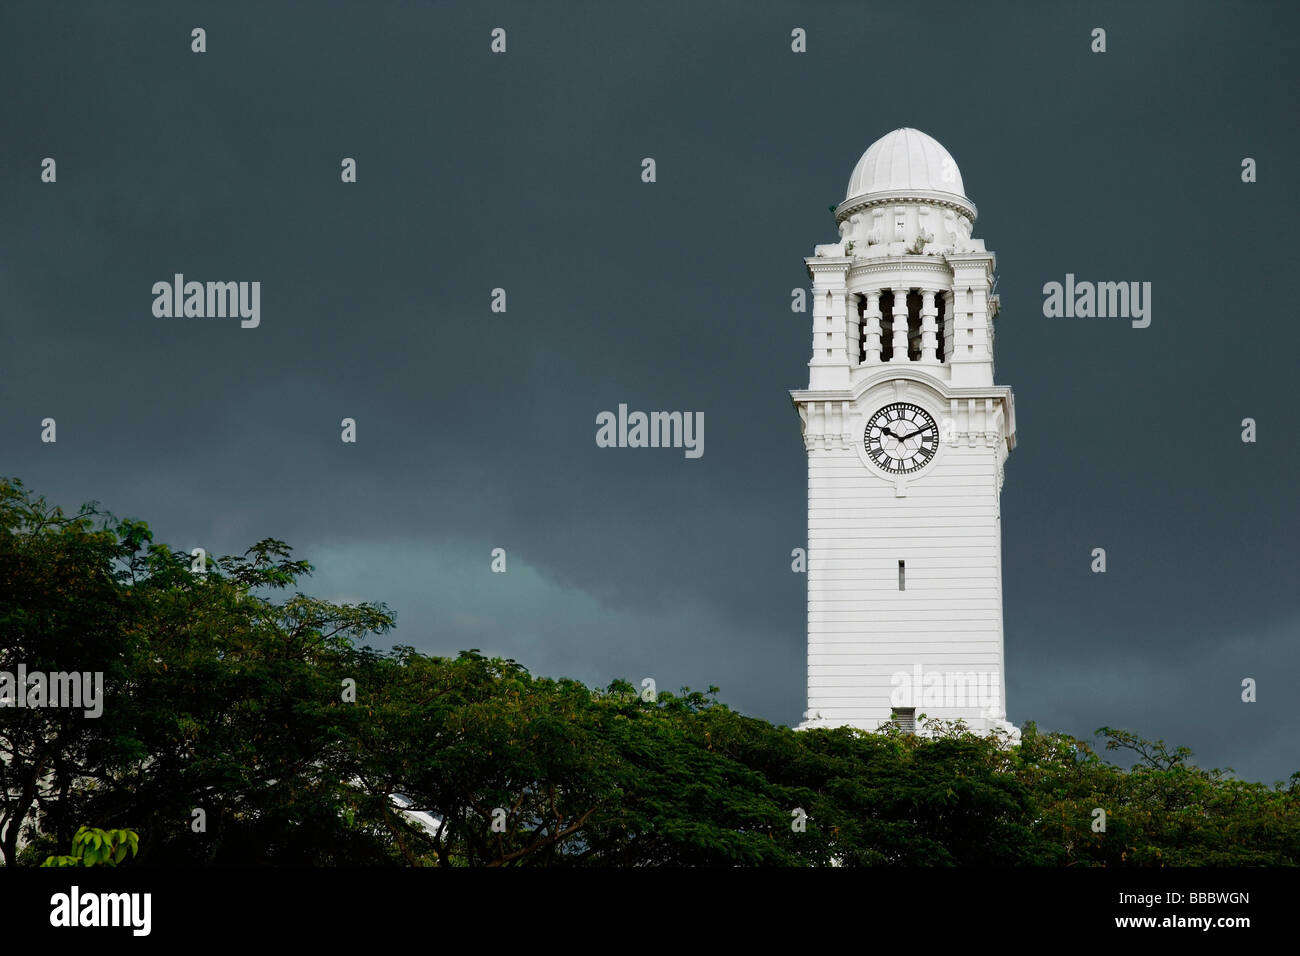 Clock tower against dark skies Stock Photo